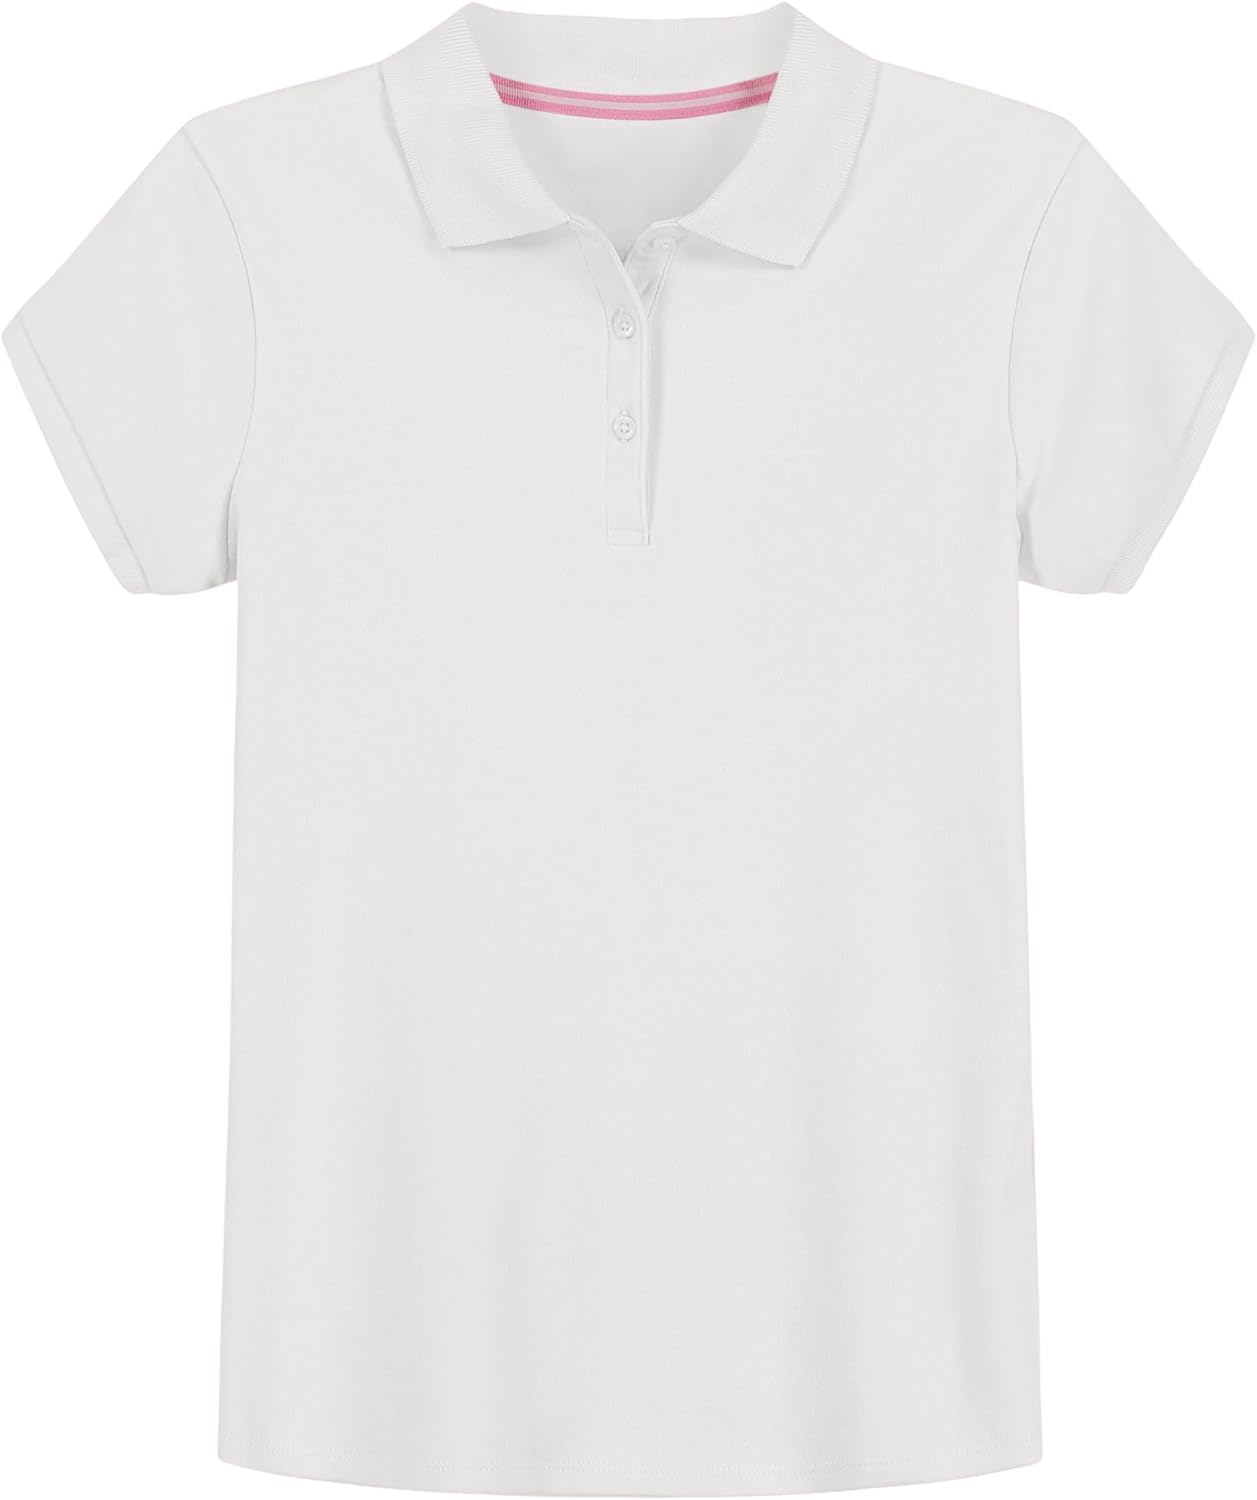 IZOD Girls' School Uniform Short Sleeve Polo Shirt, Button Closure, Comfortable & Soft Interlock Fabric